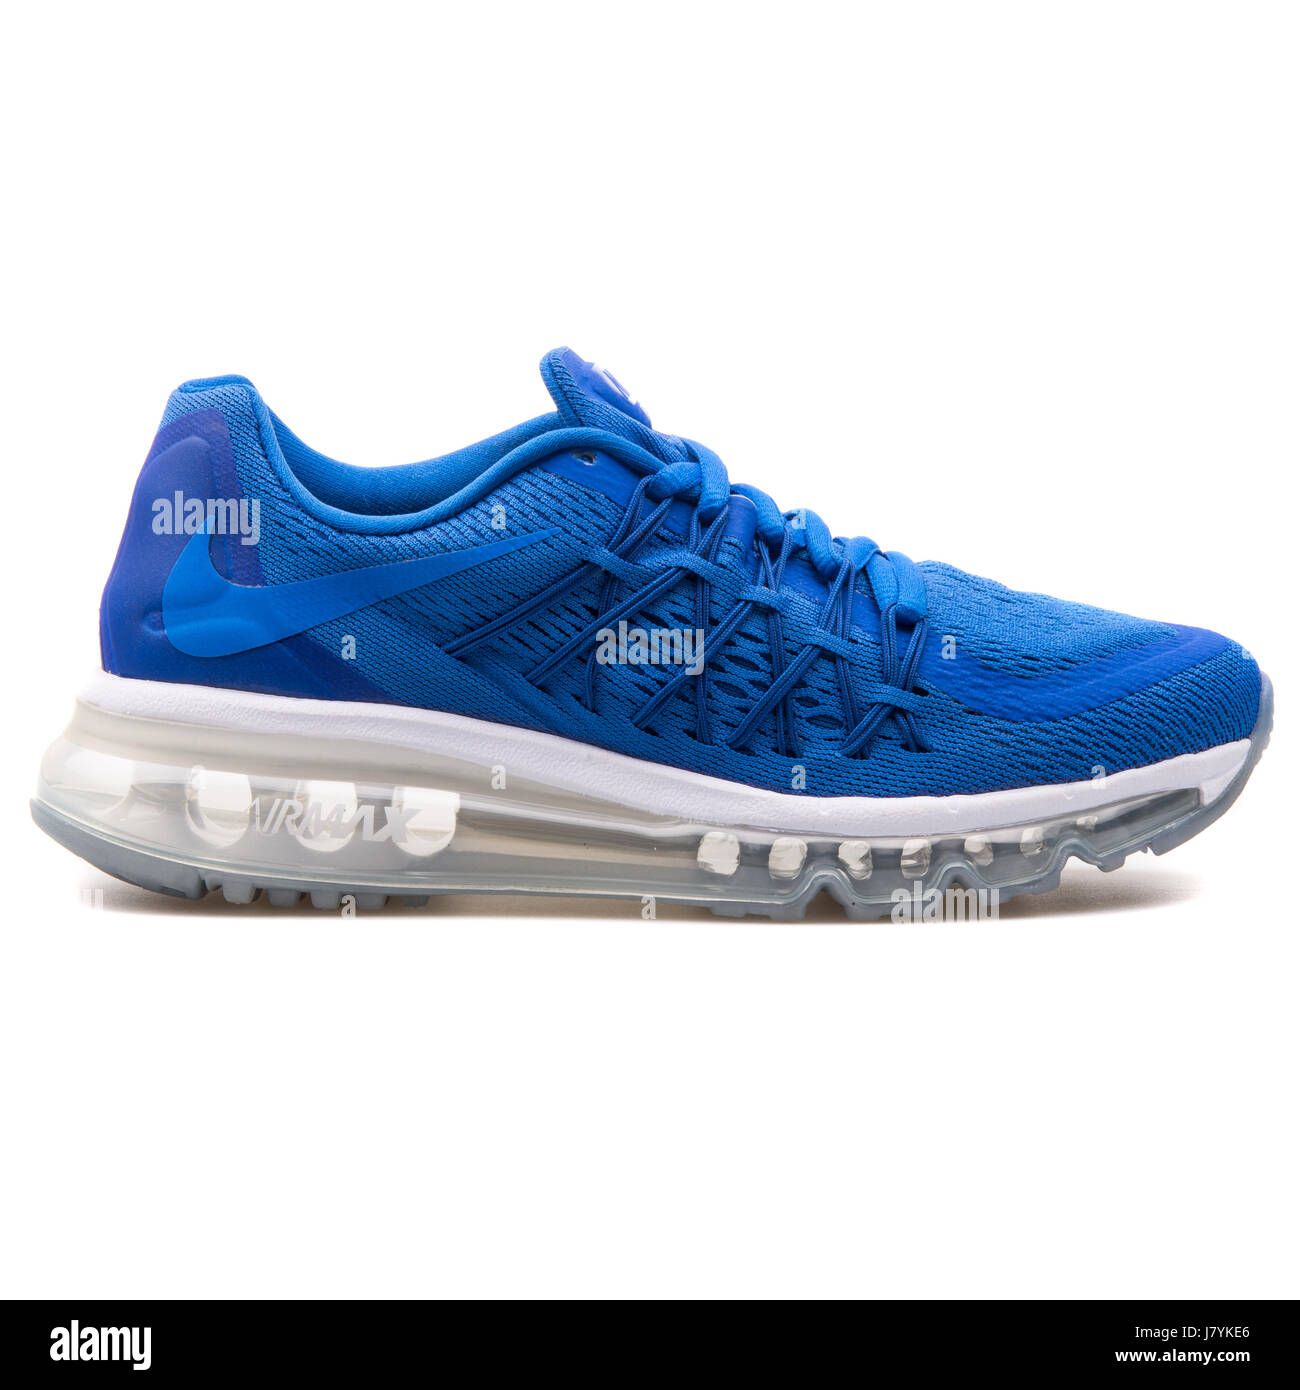 Nike Air Max 2015 (GS) Gioventù blu acceso Sneakers - 705457-402 Foto stock  - Alamy